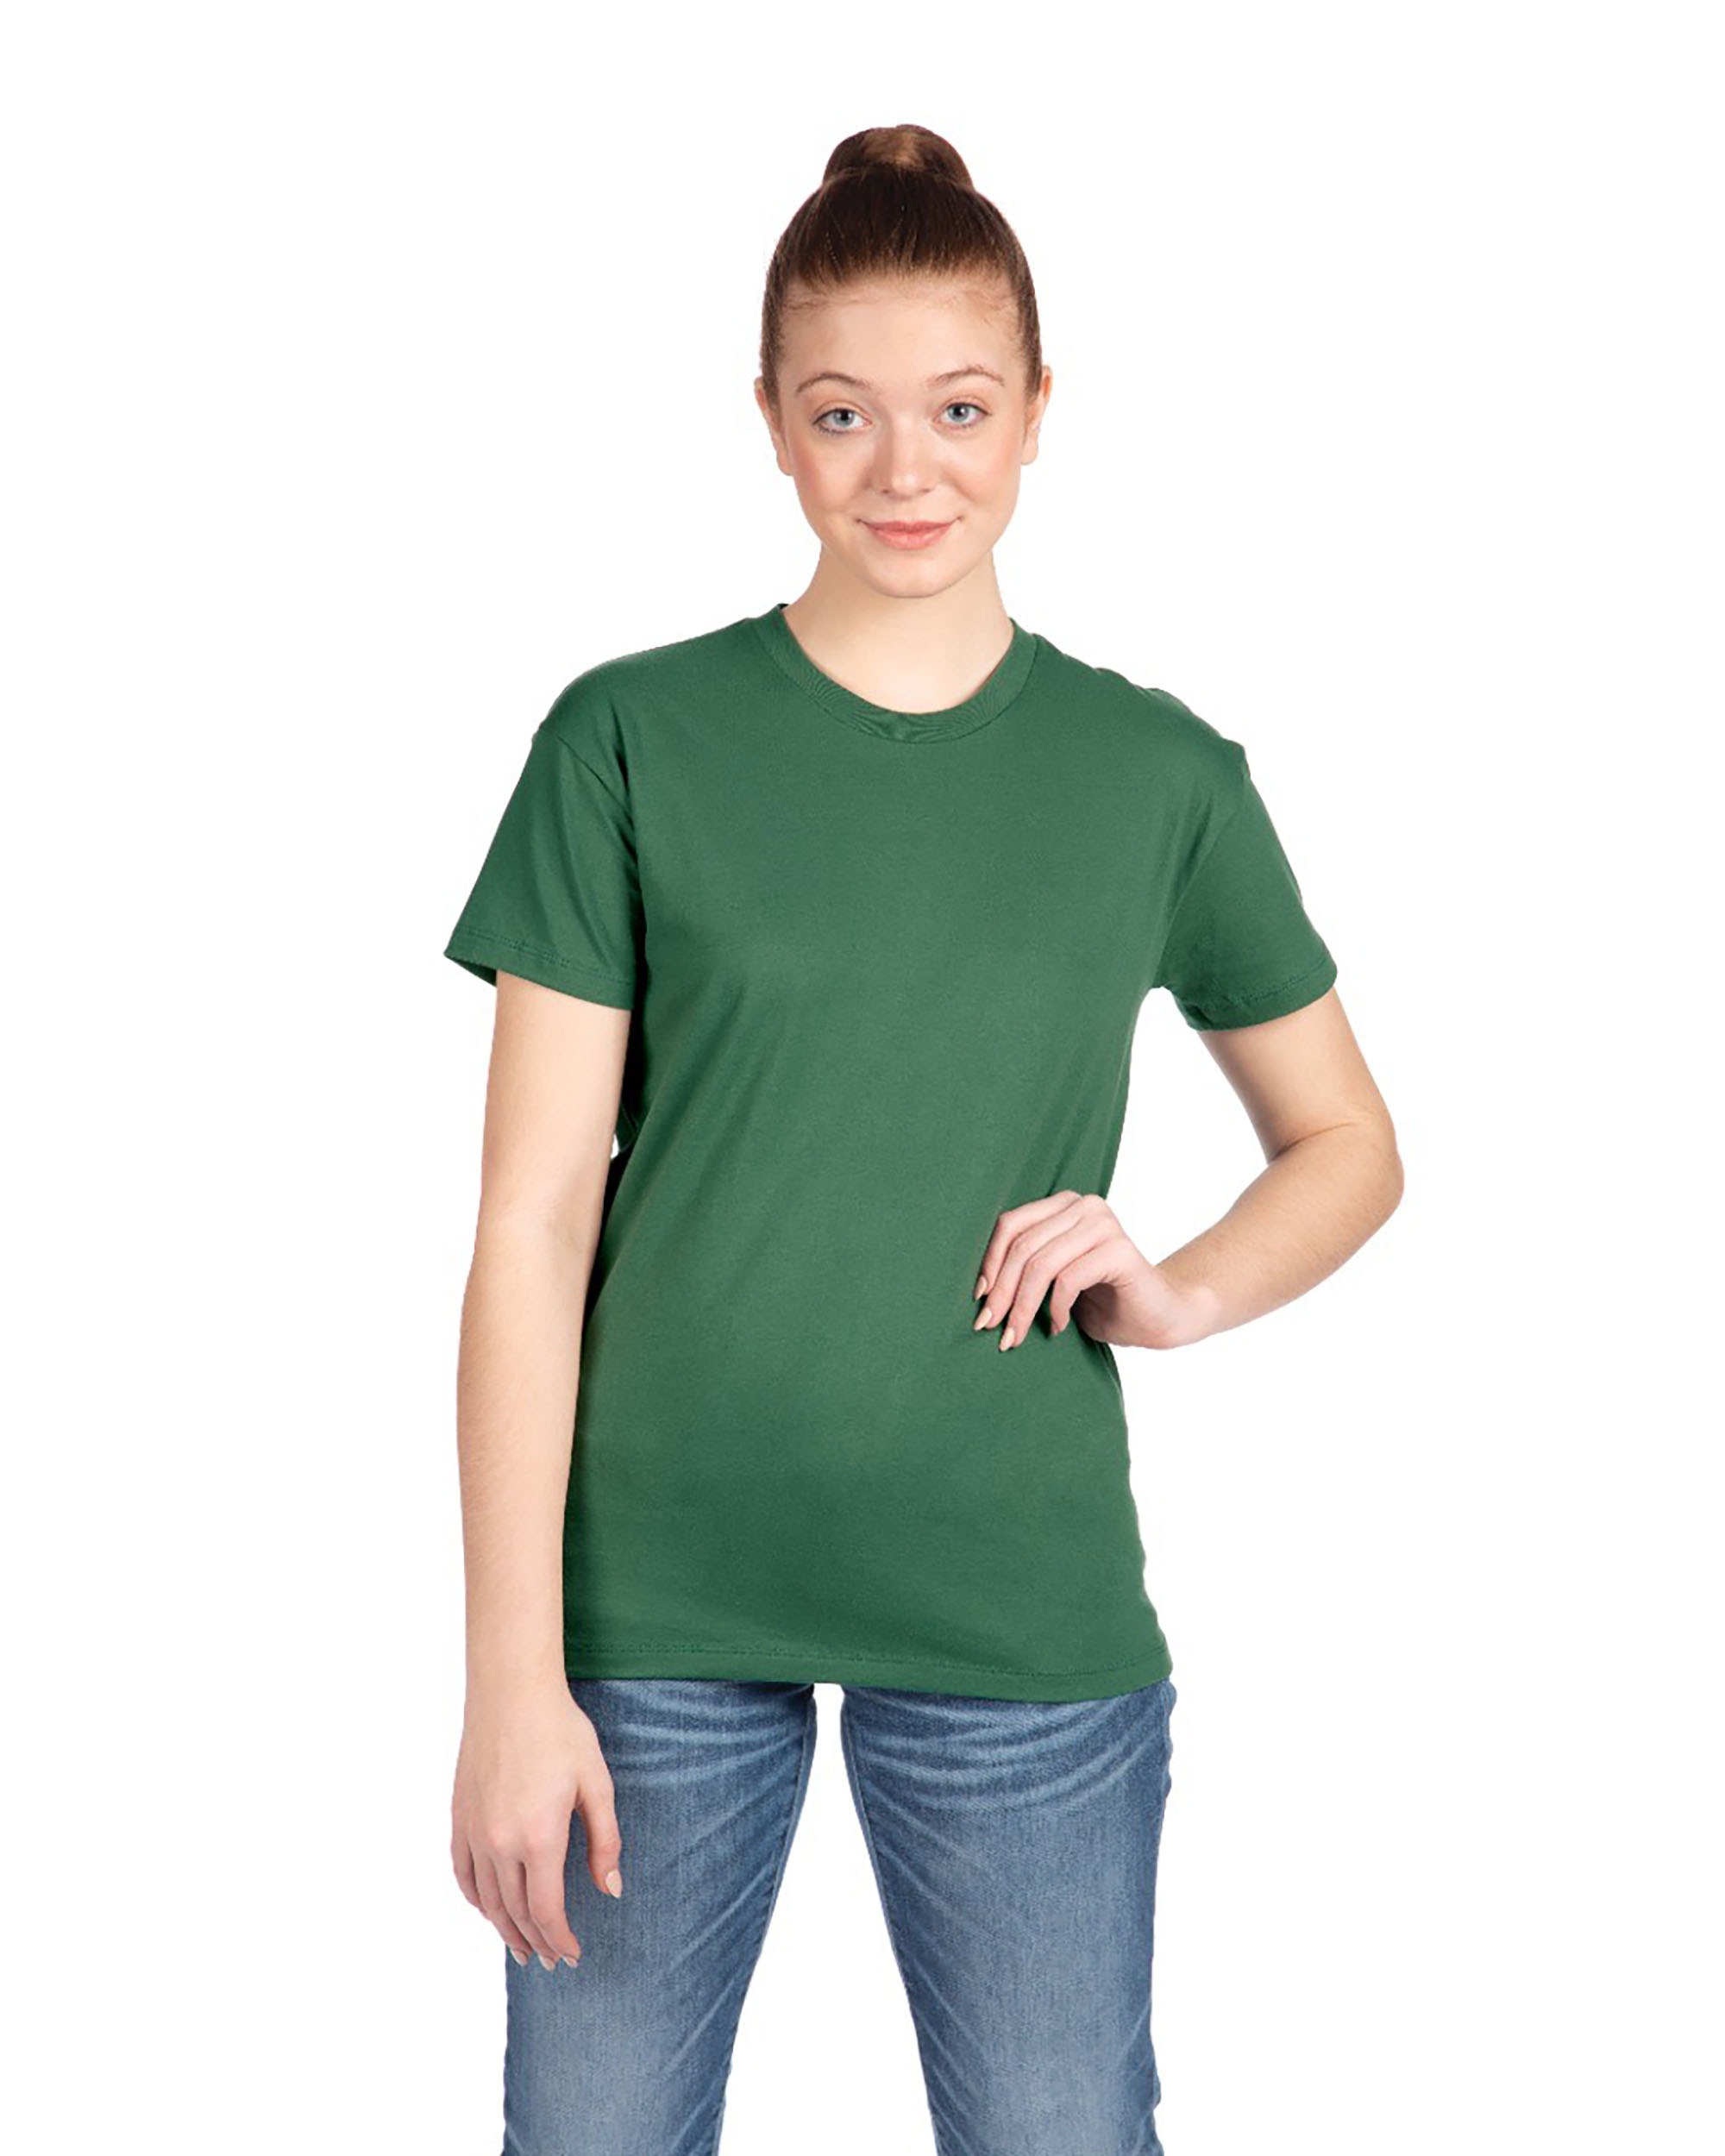 Next Level Apparel® 3910 Women's Cotton Relaxed T-Shirt